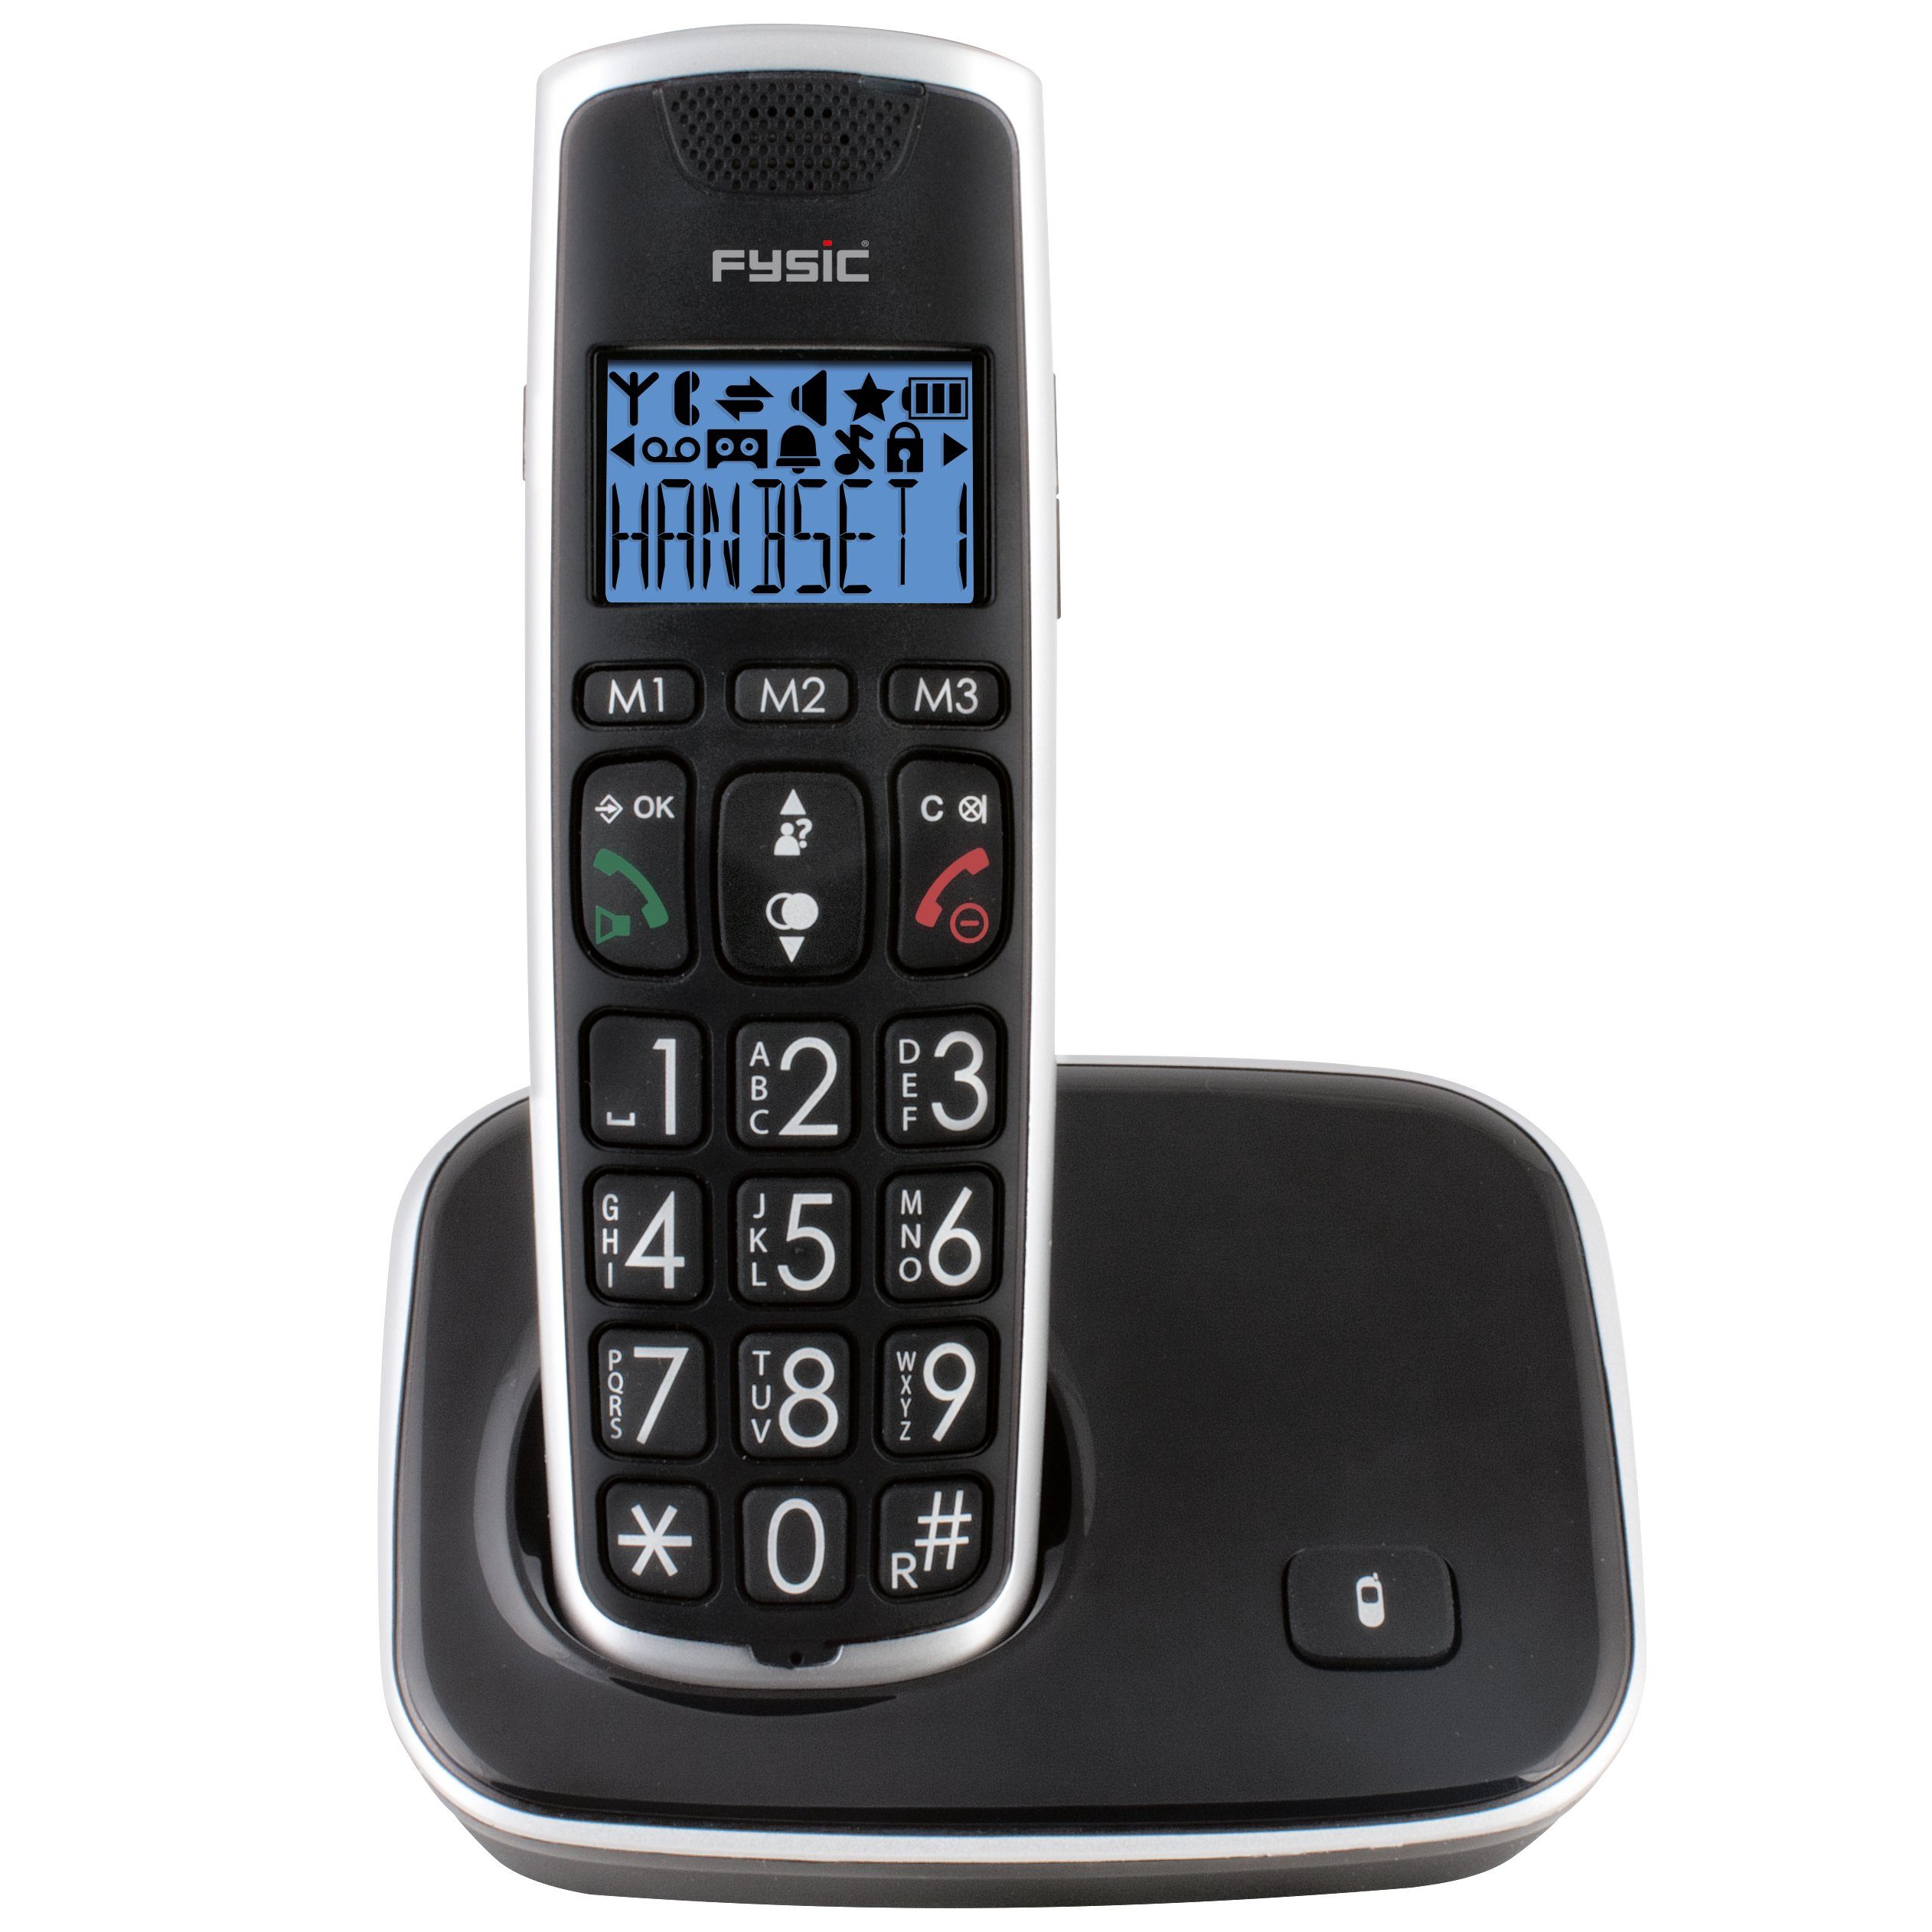 Fysic FX-6020 Seniorentelefon (Mobilteile: 1-2, Netzspannung 100-240 V AC, Seniorentelefon mit großen Tasten, Hörgerätkompatibel, 10h Sprechzeit)